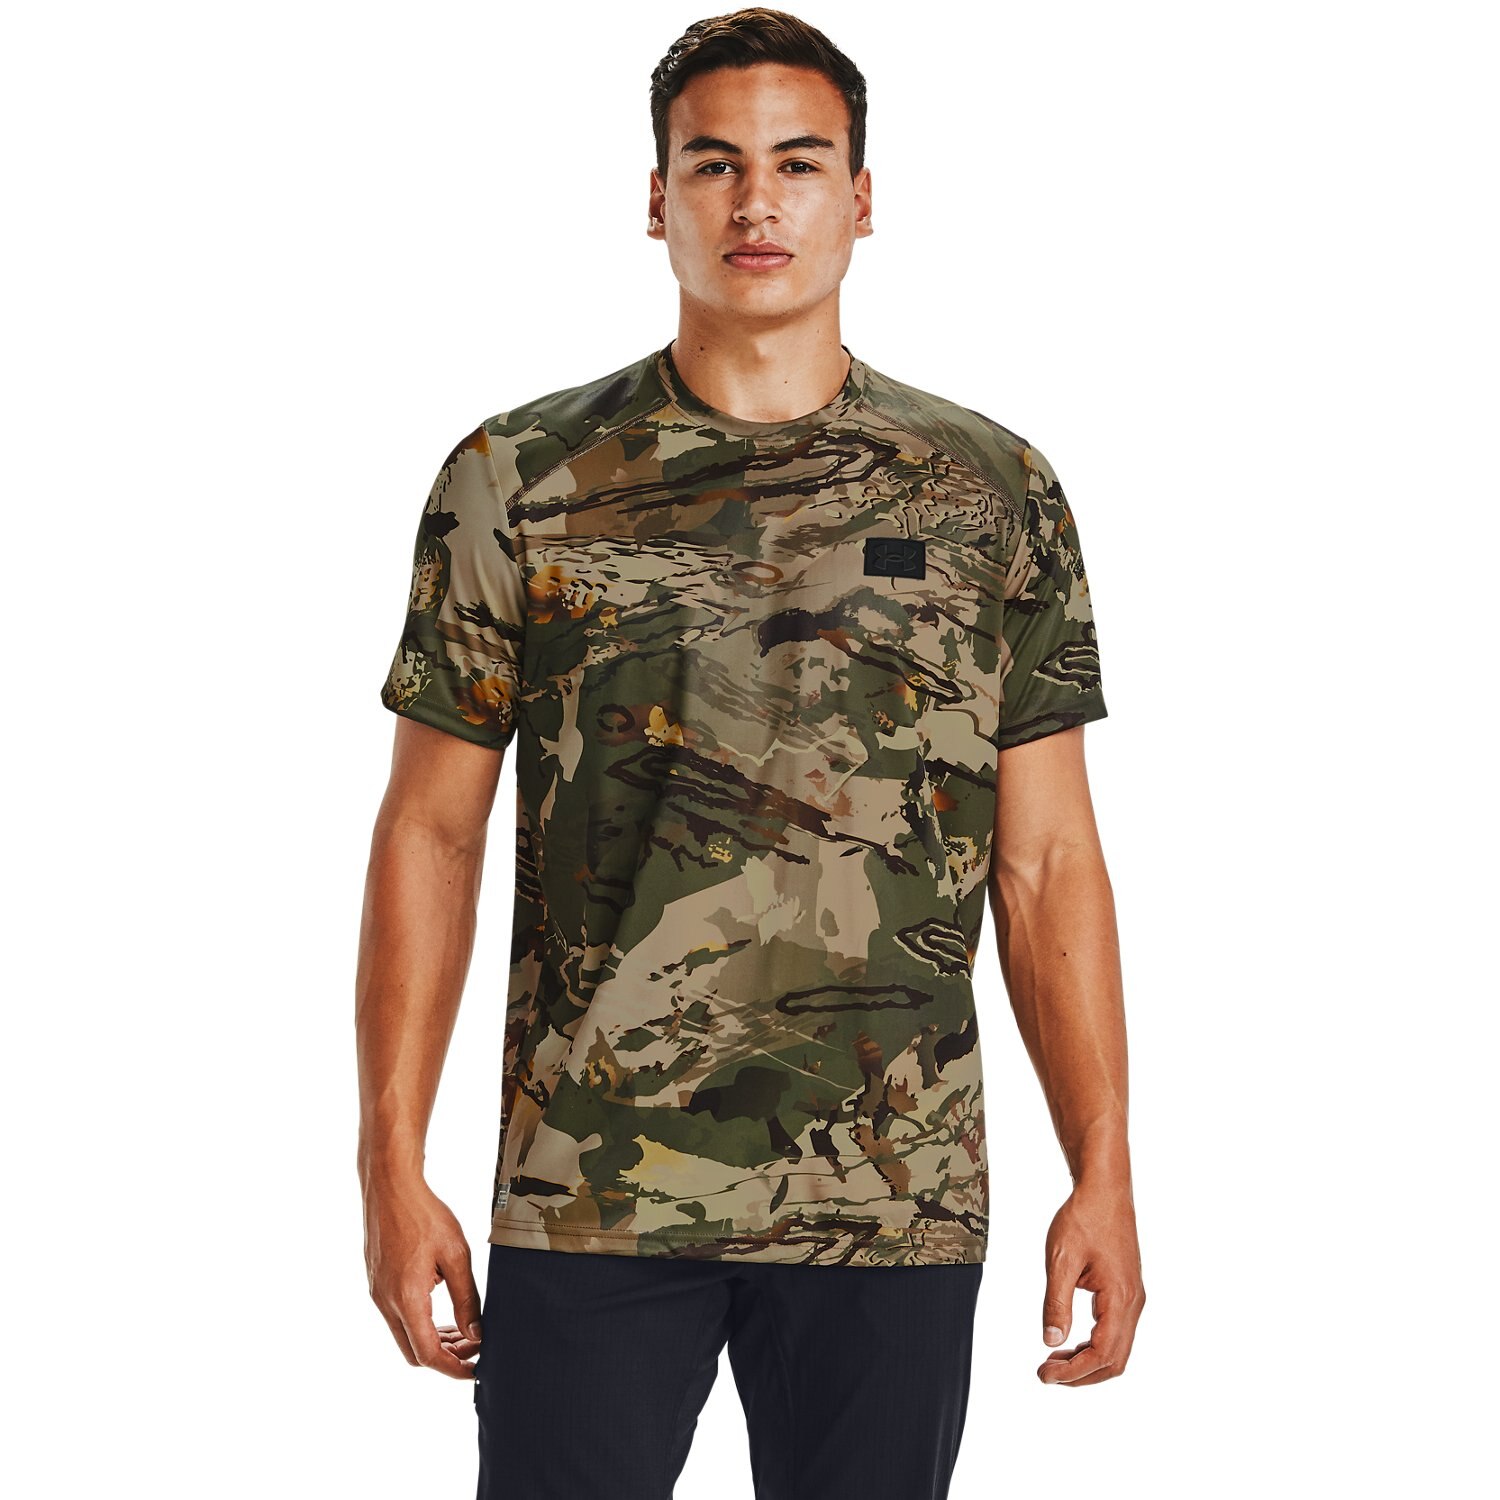 Under Armour - Mens Iso-Chill Brushline T-Shirt